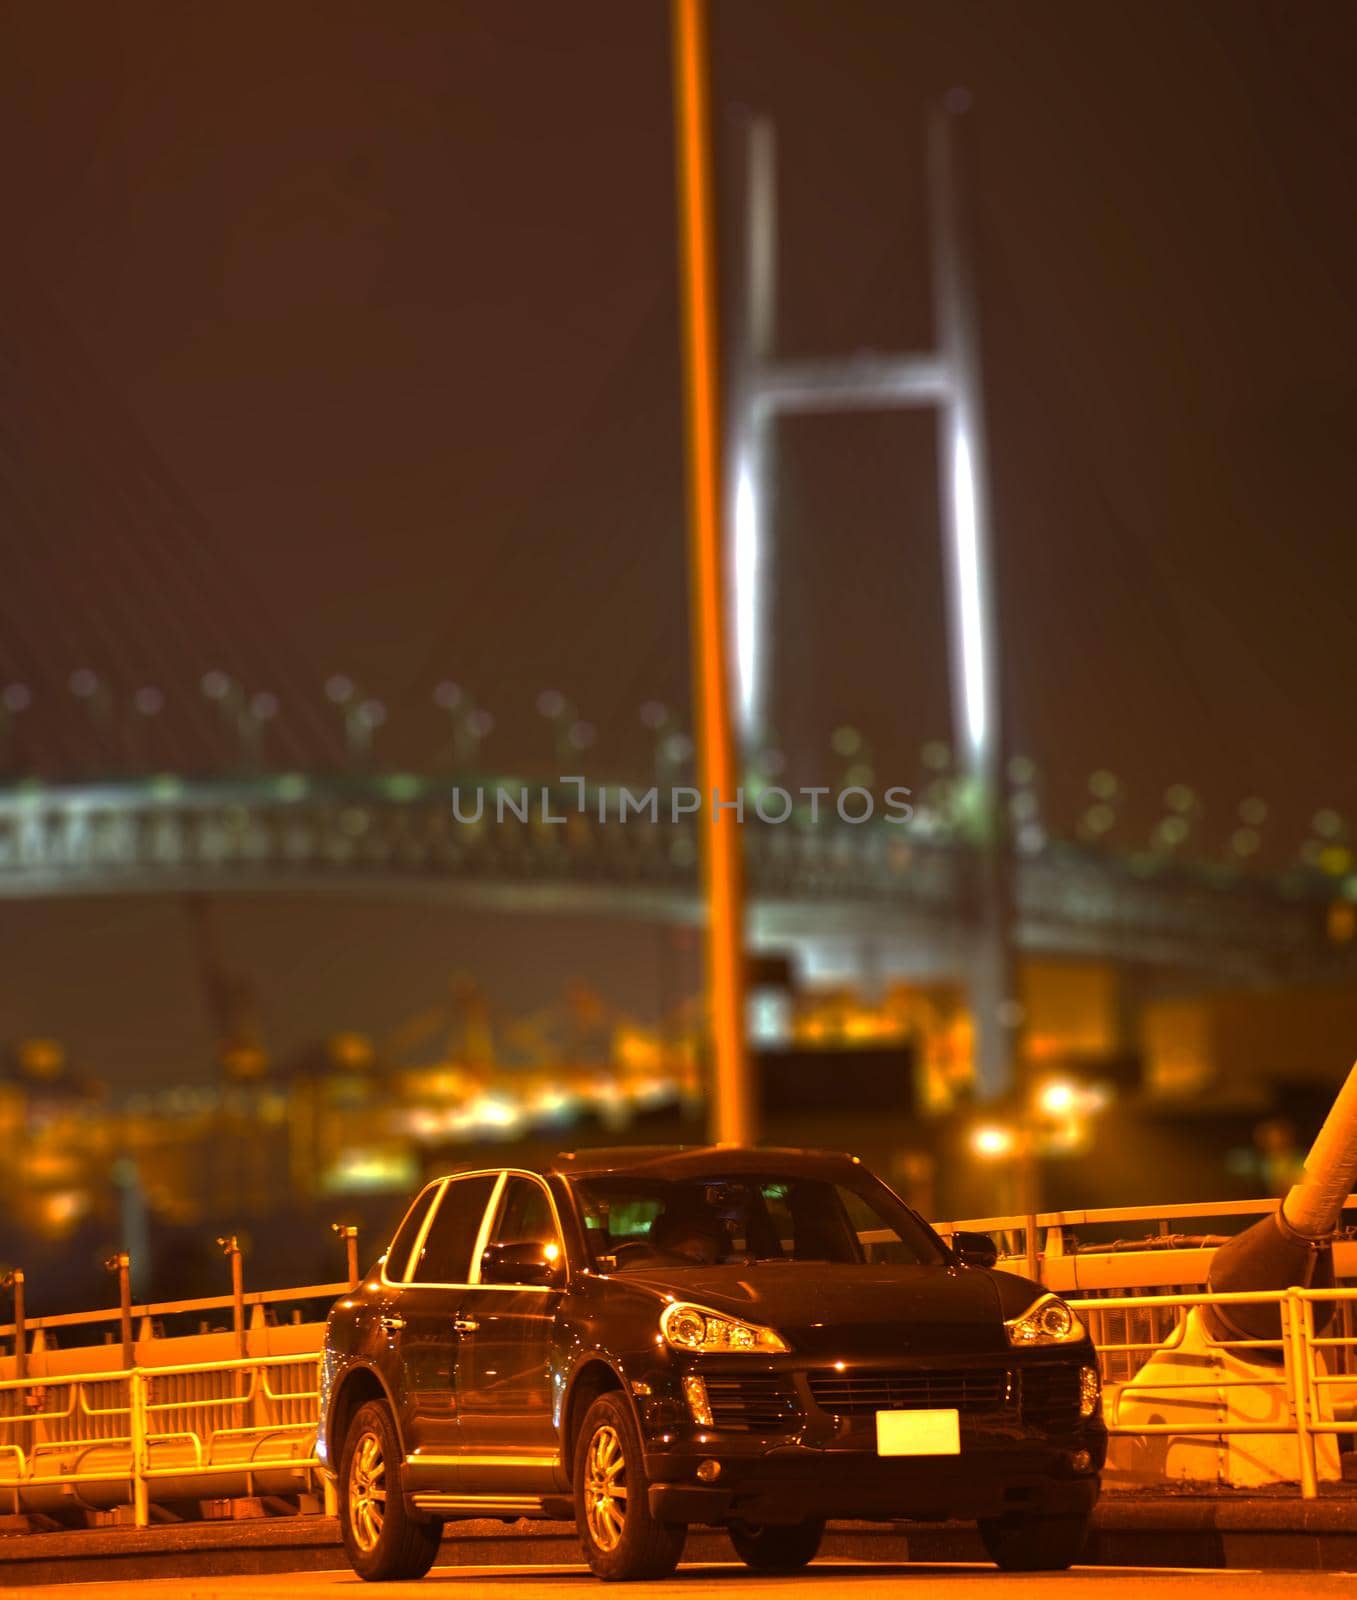 Baybridge and car. Shooting Location: Yokohama-city kanagawa prefecture